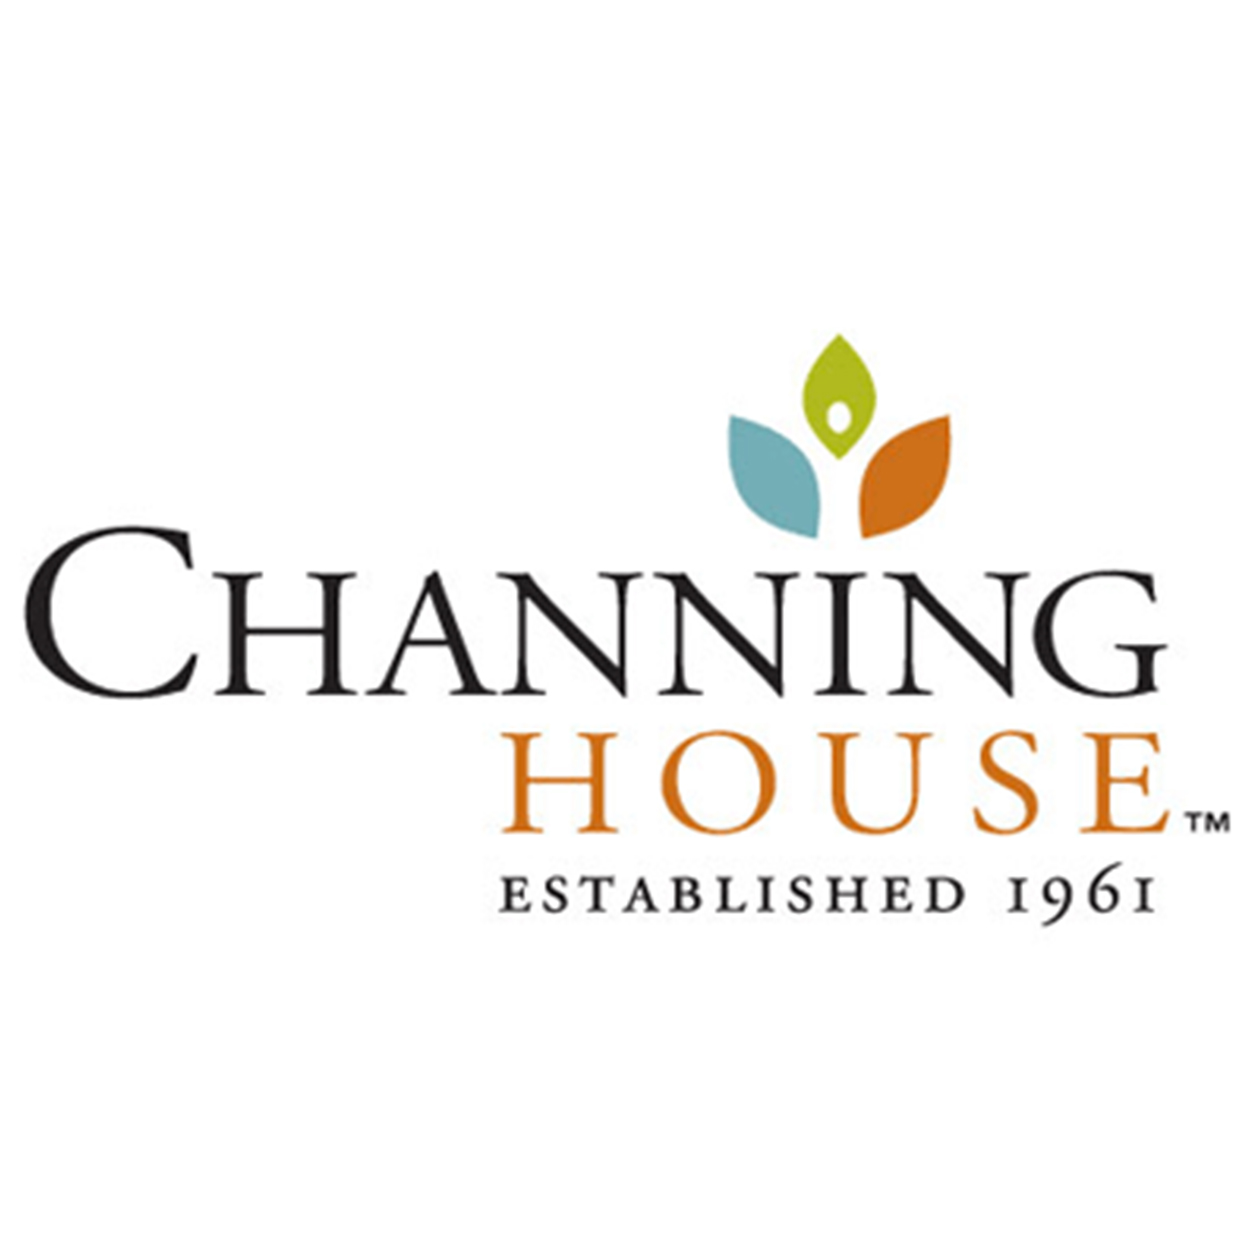 Channing House logo